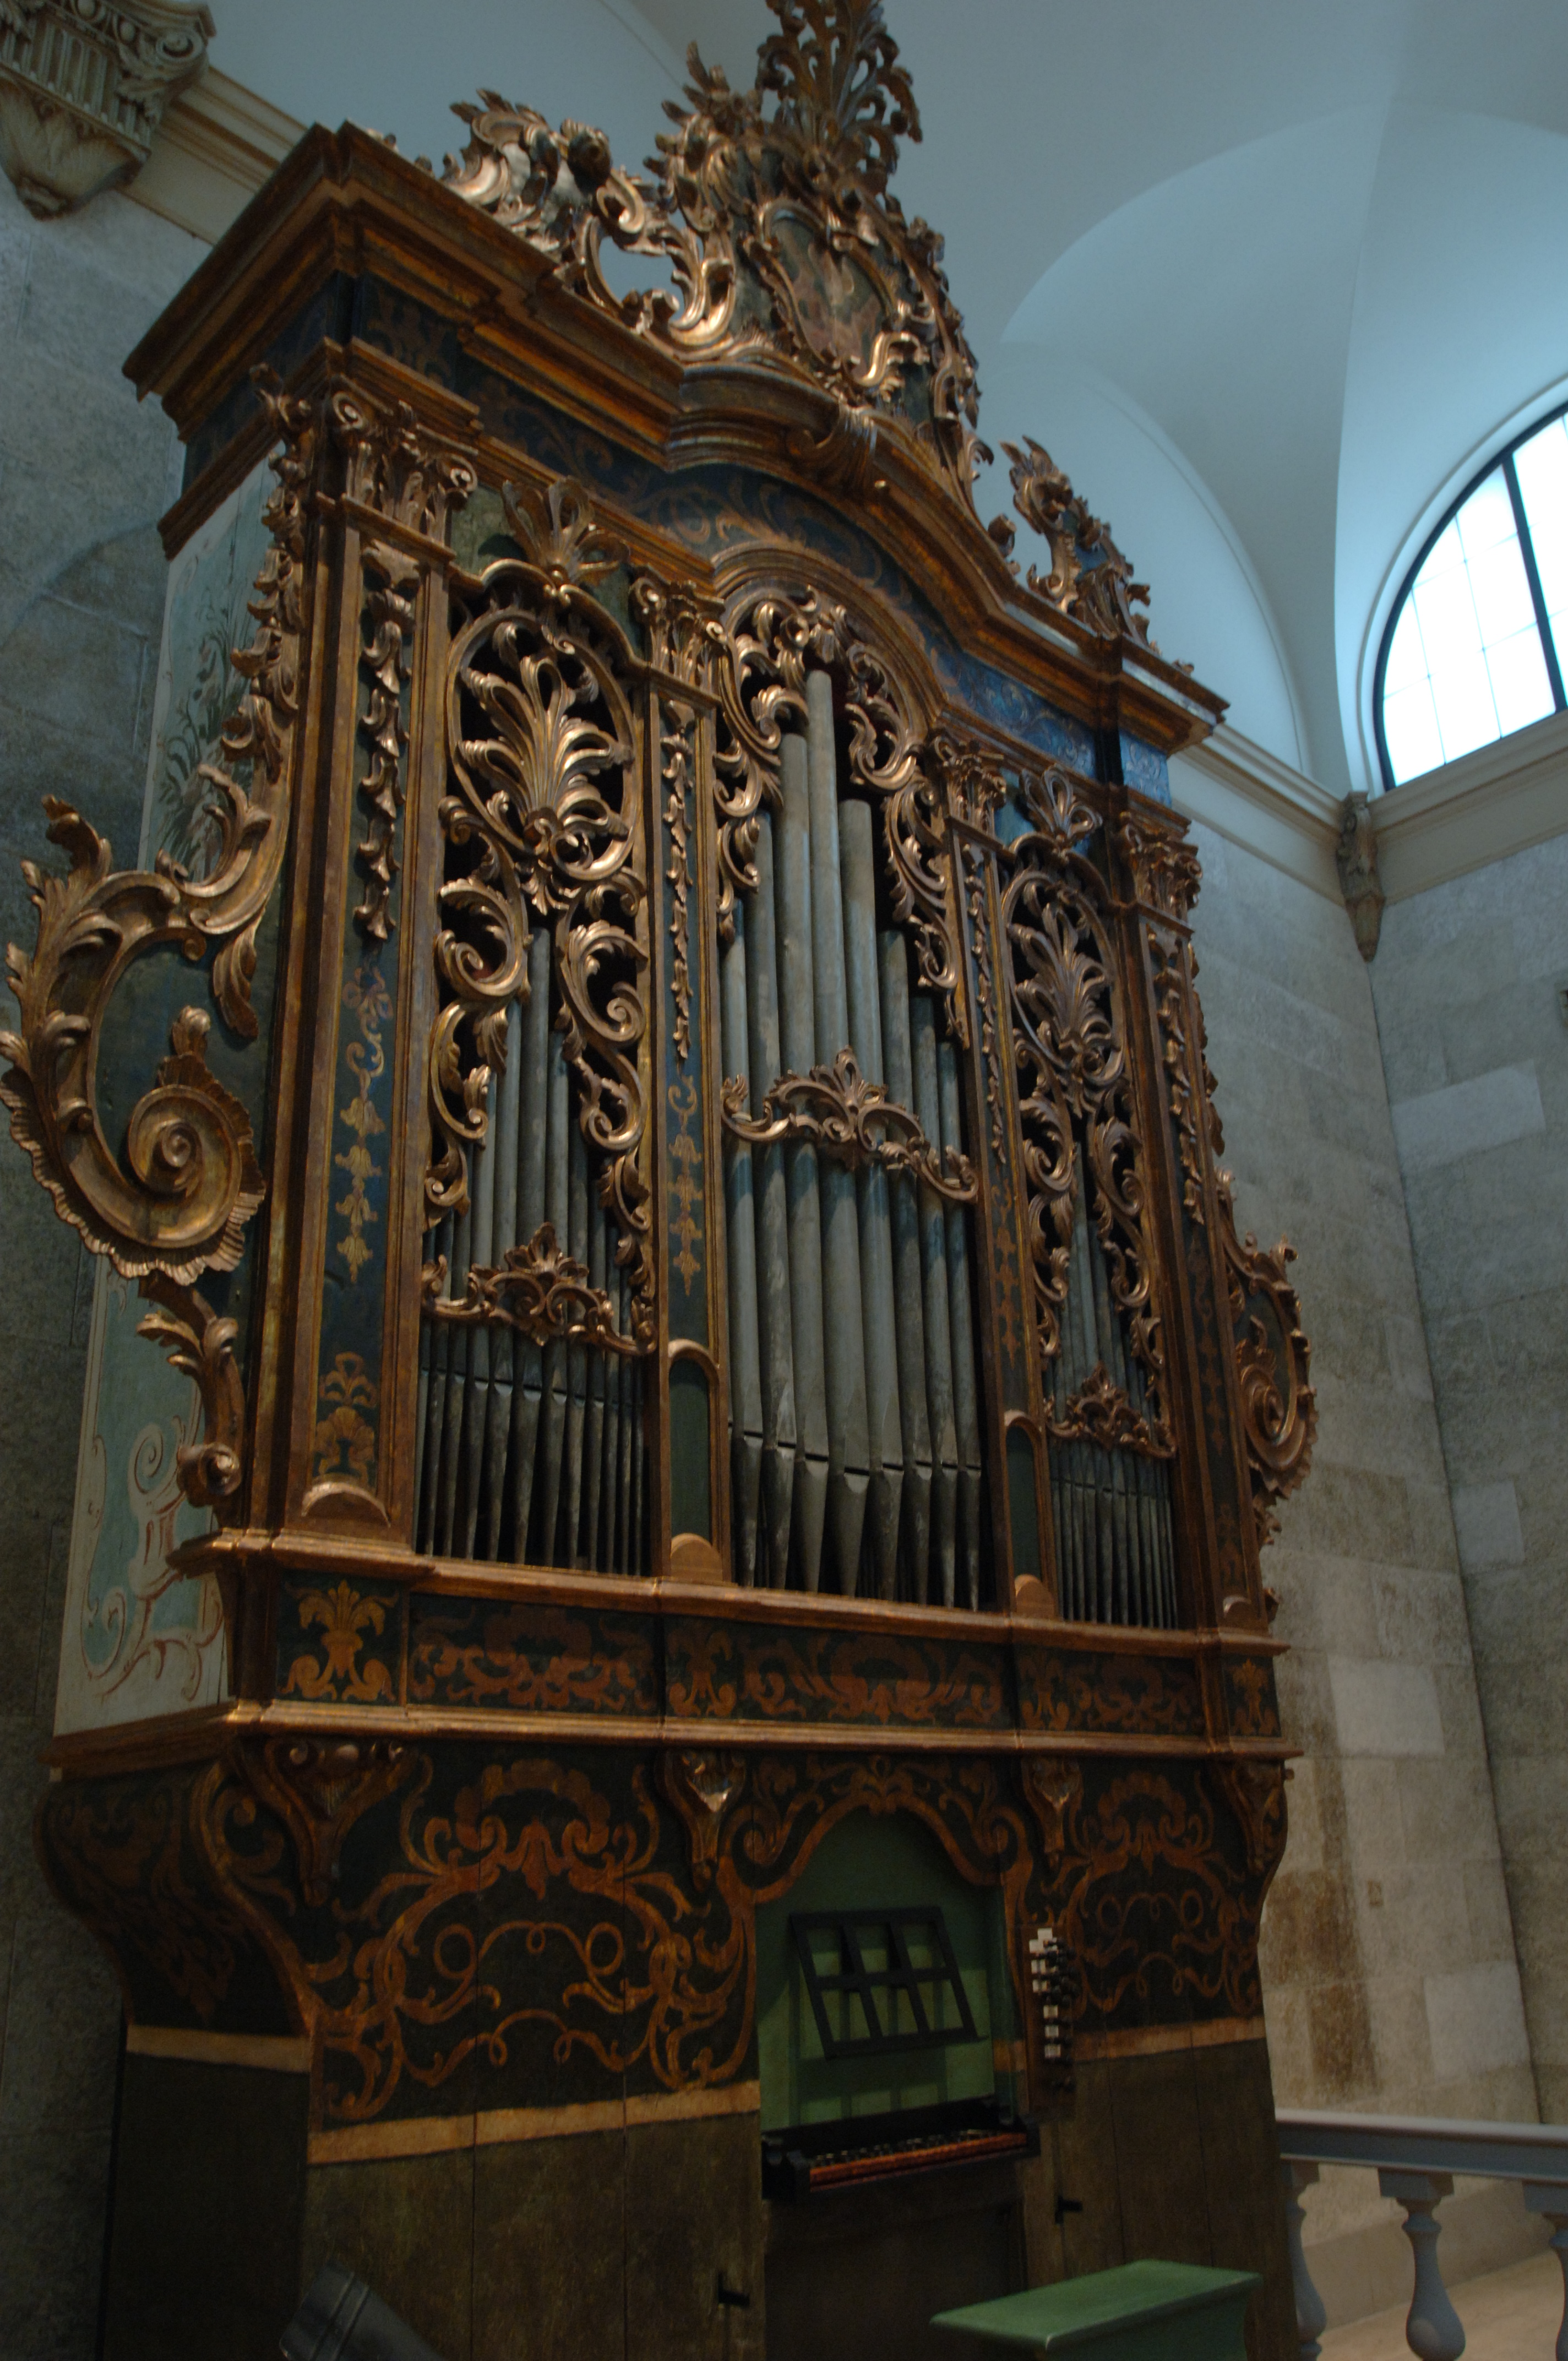 The Italian Baroque Organ - Eastman School of Music